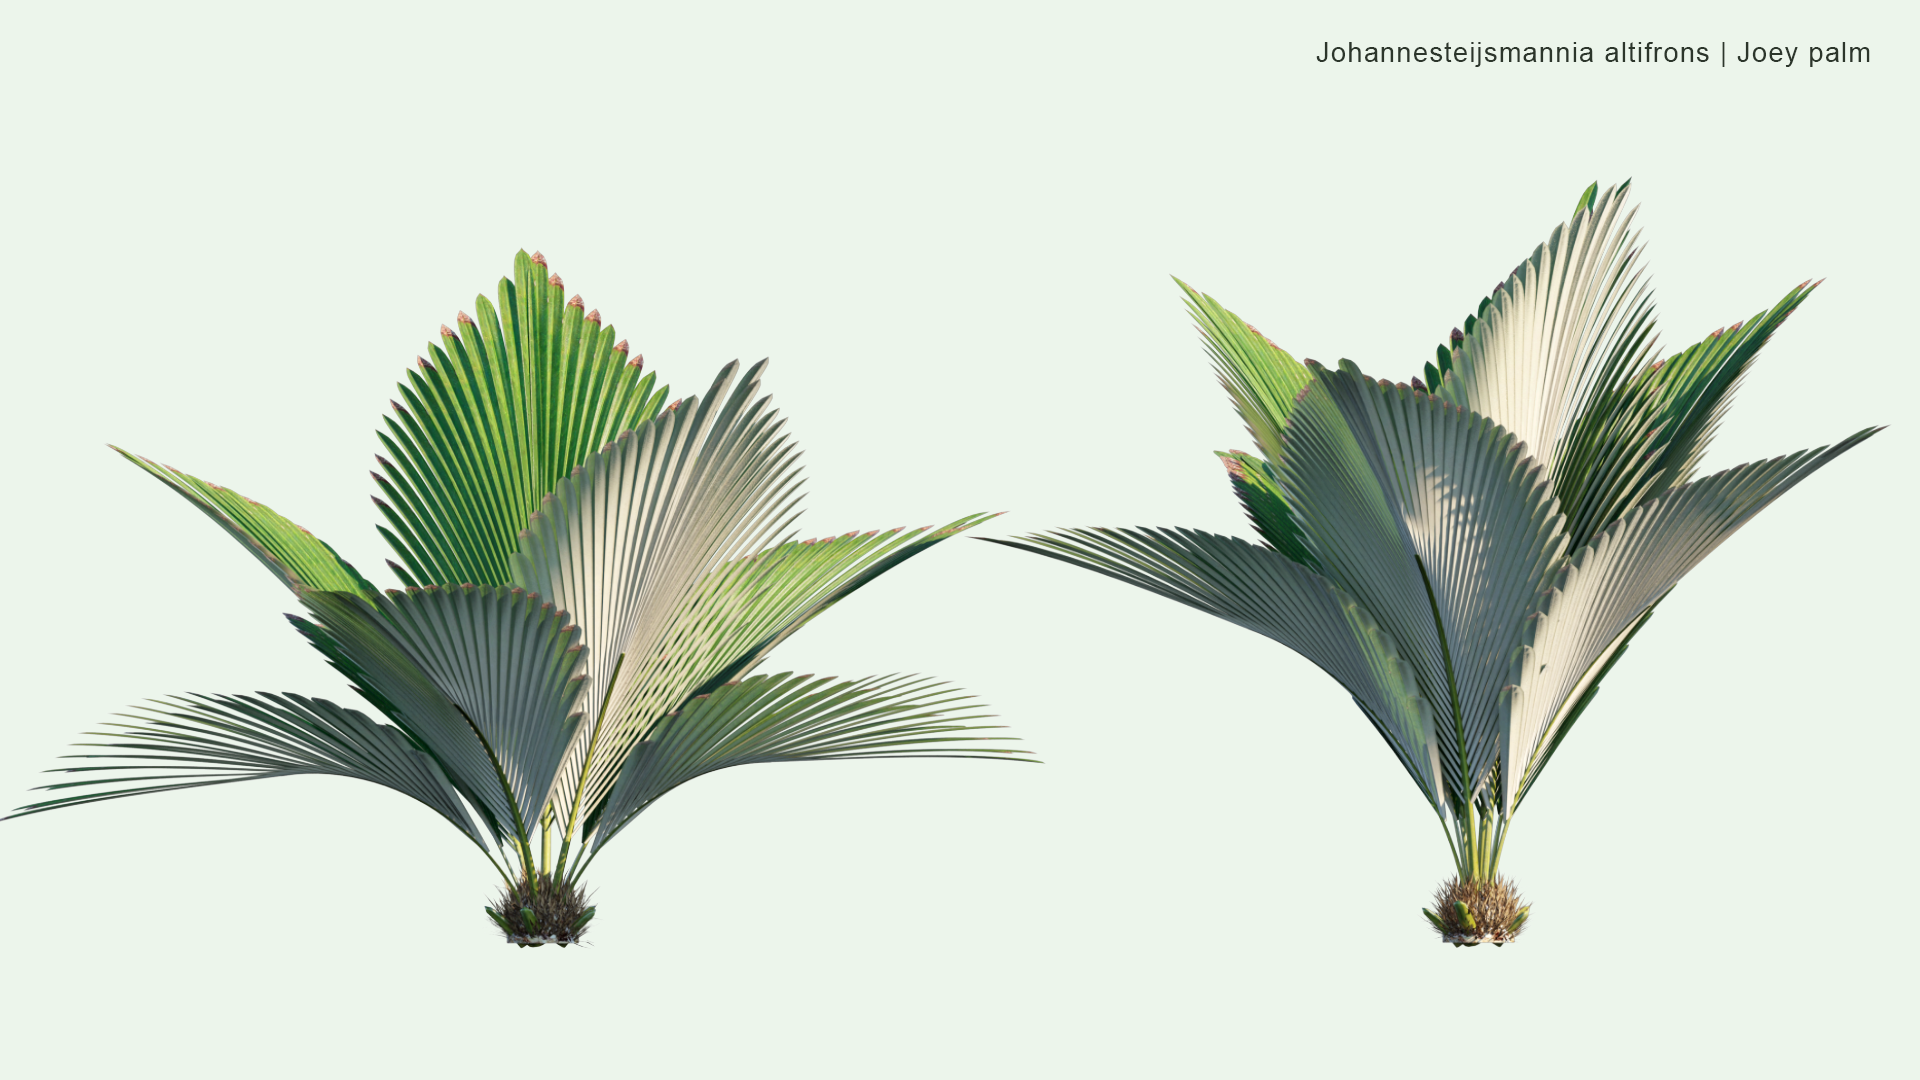 2D Johannesteijsmannia Altifrons - Joey Palm